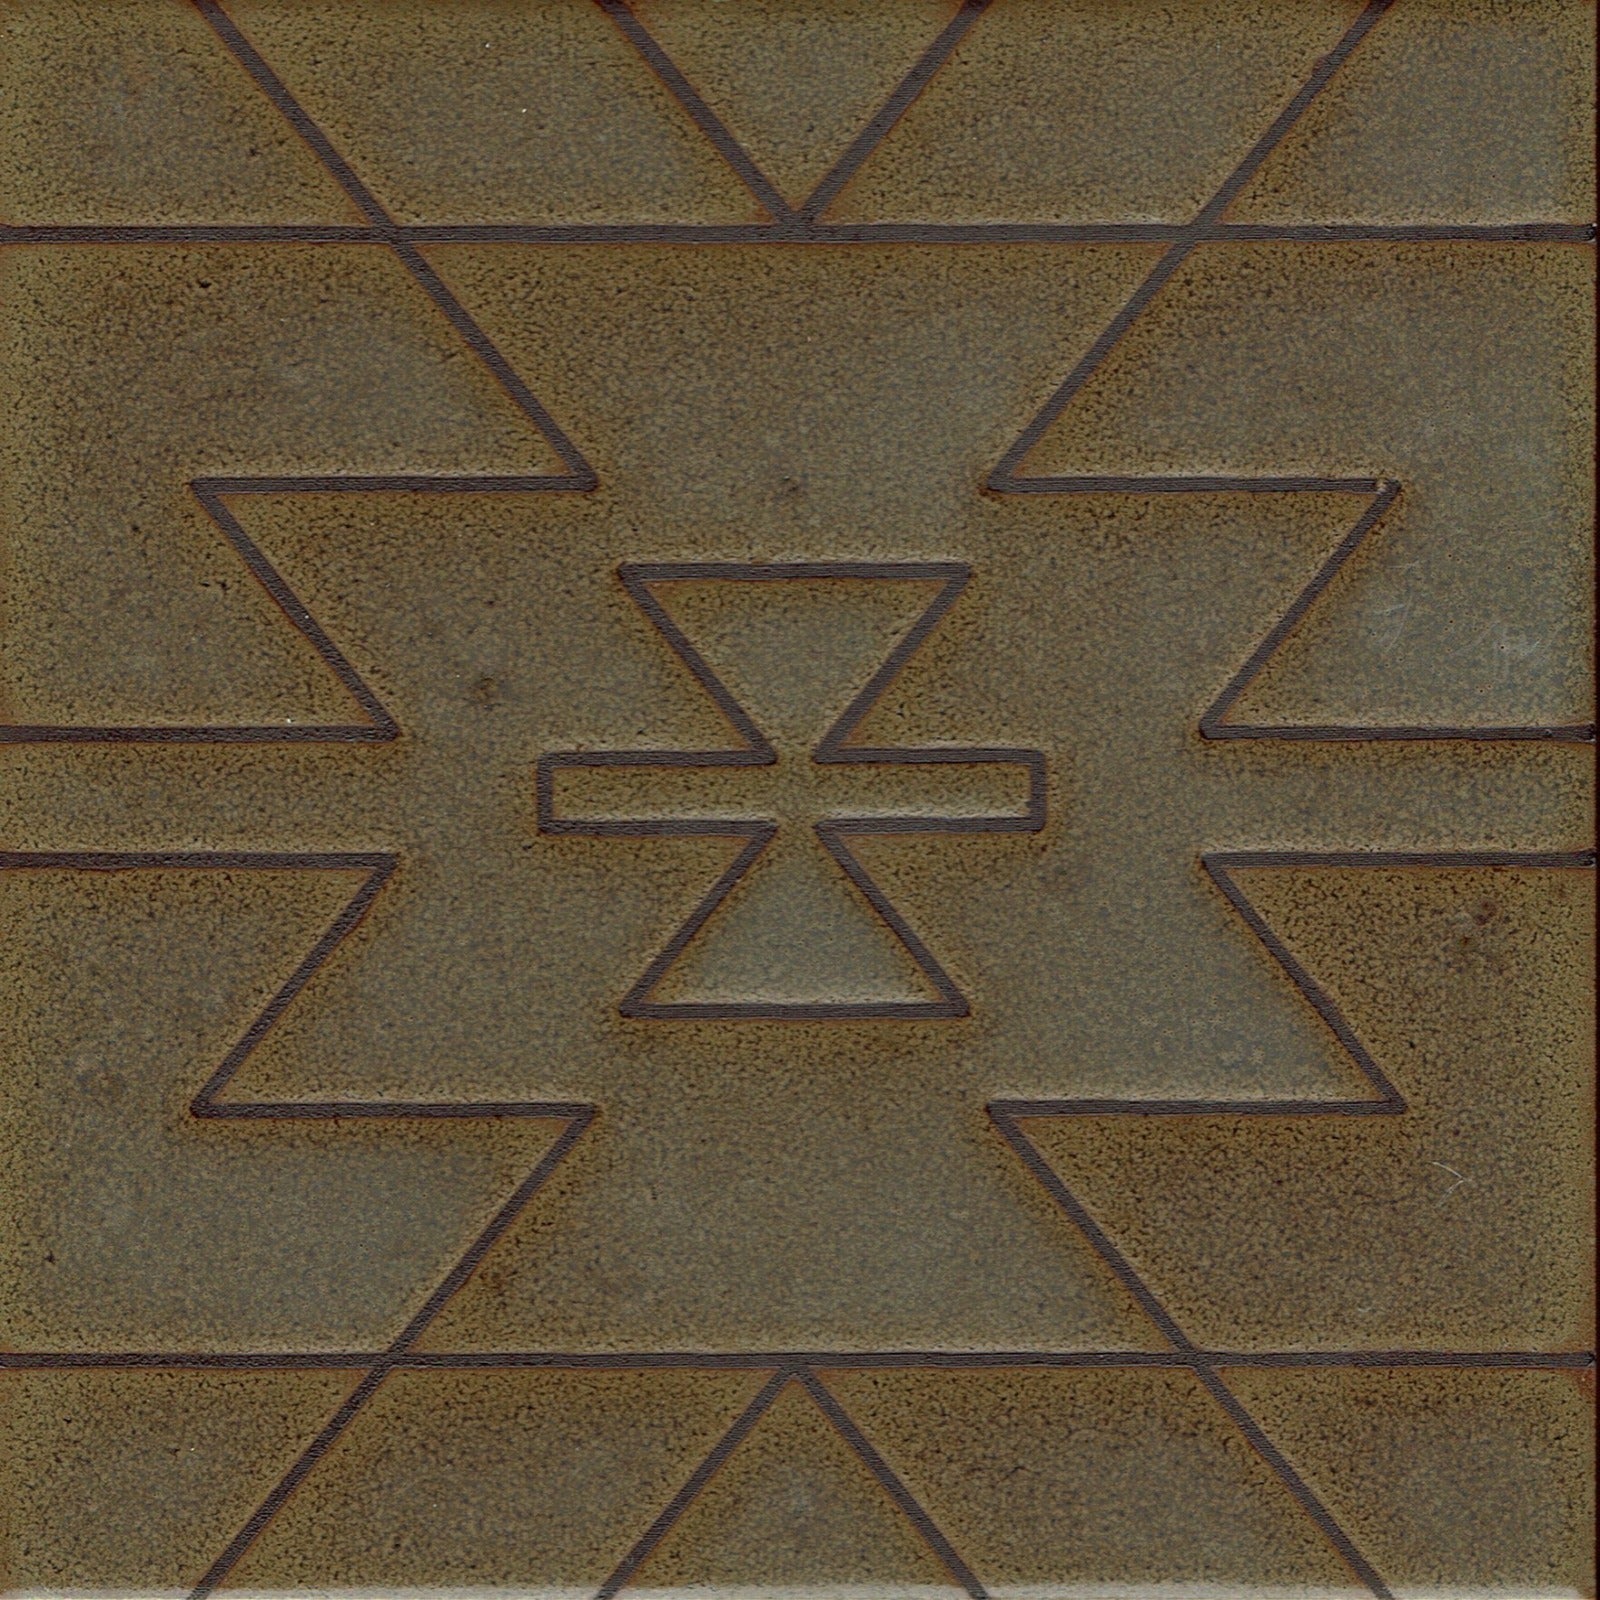 Madras 6 (6"x6") - Handpainted Ceramic Tile Trivet for Kitchen, Bathroom, Wall & Table Decor